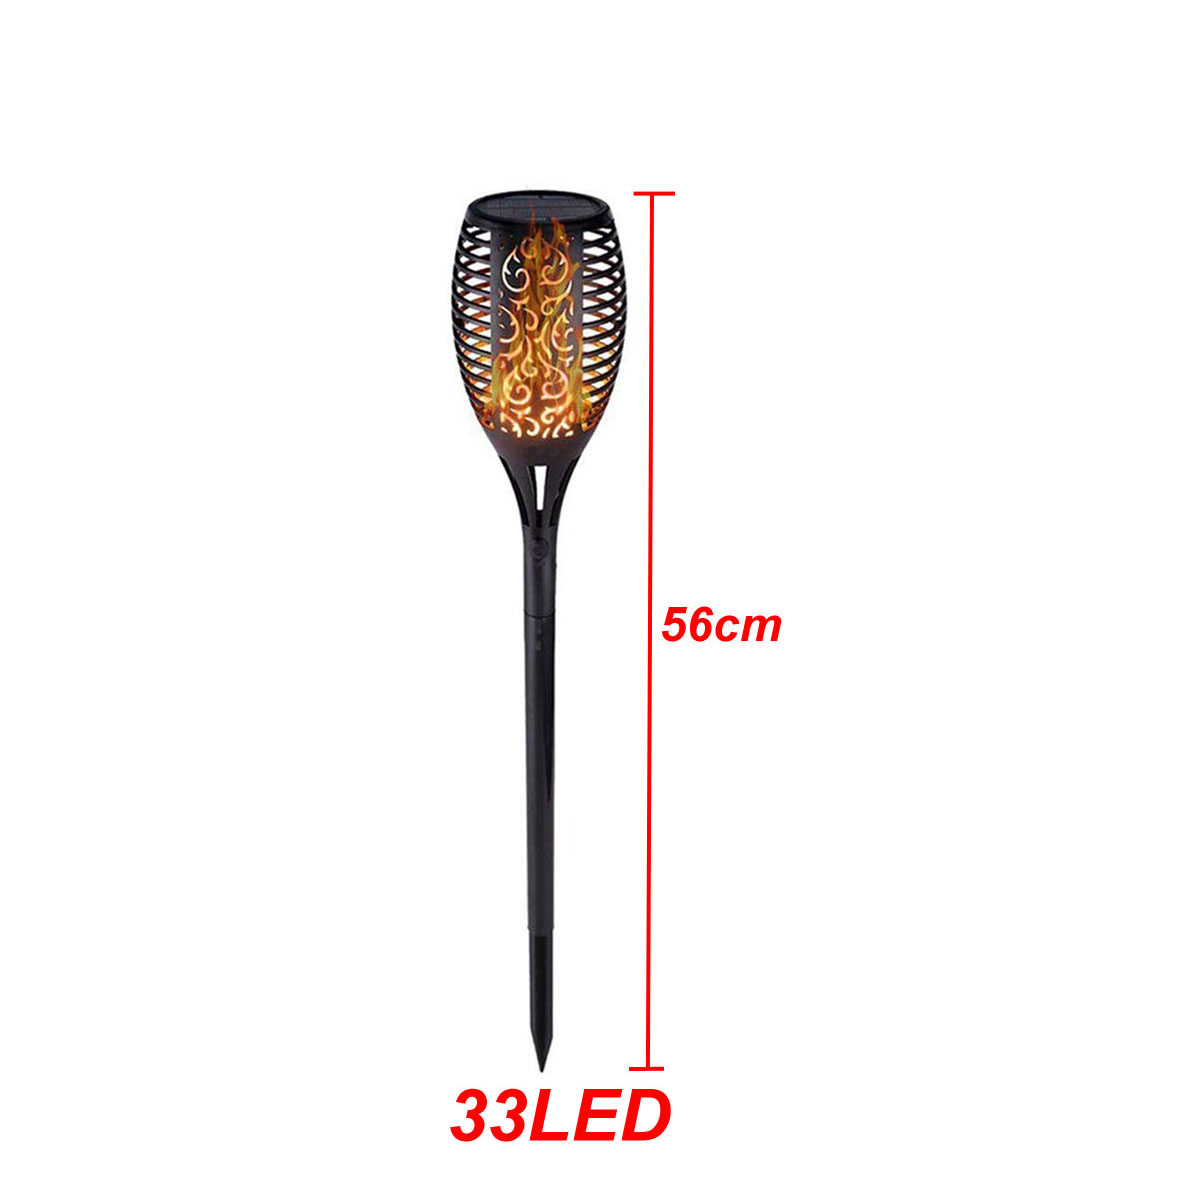 33LEDs-56CM-Height-Waterproof-Solar-Fire-Torch-Light-Flickering-Flame-Lamp-Outdoor-Landscape-Garden--1656768-7